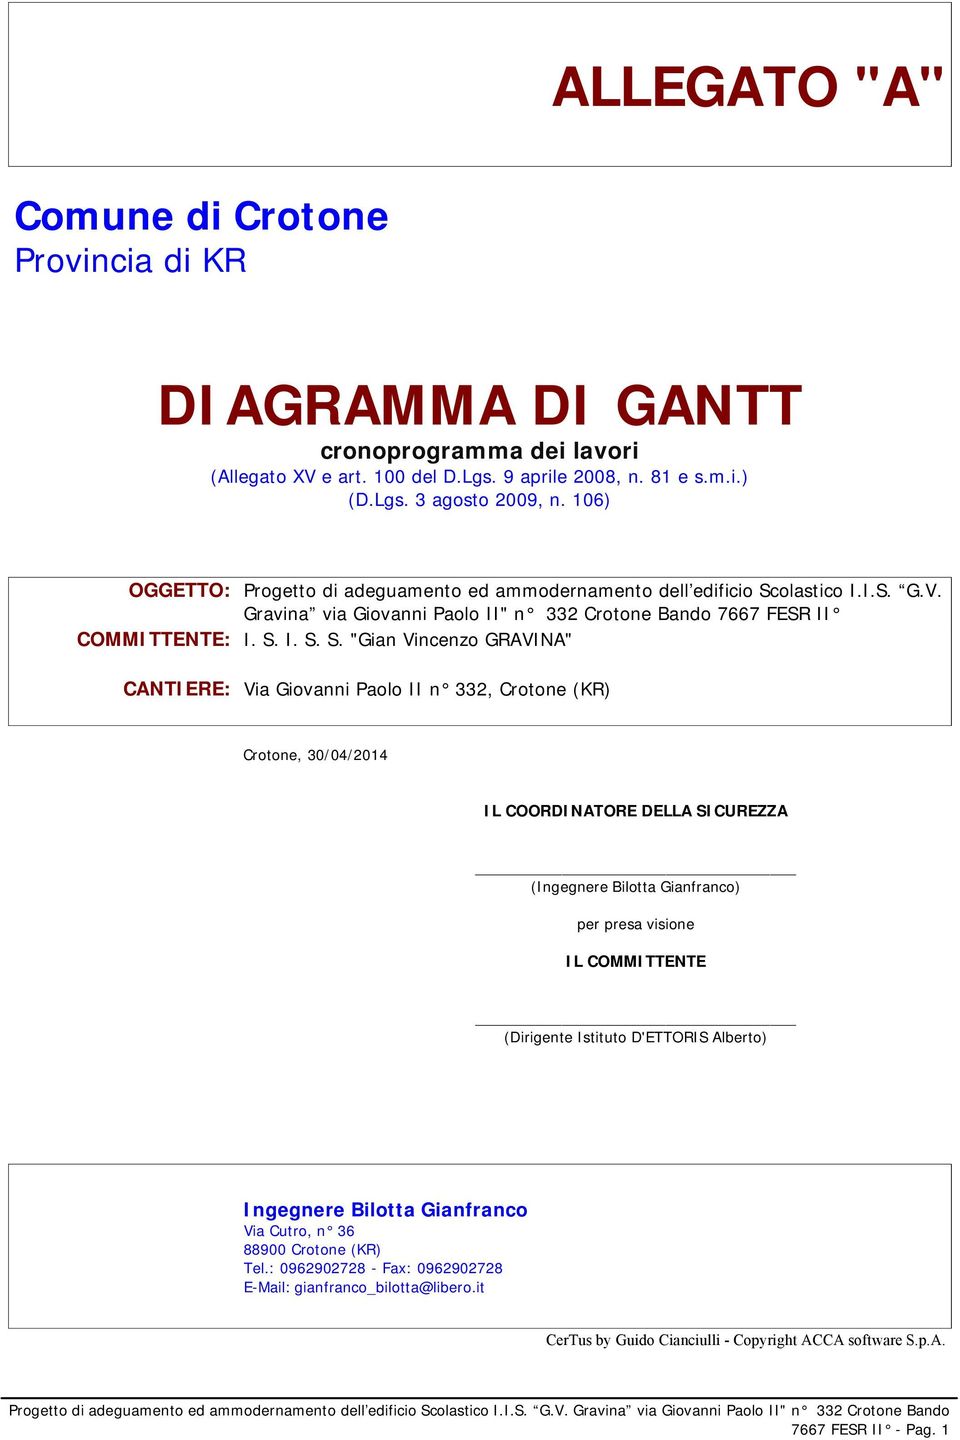 olastico I.I.S. G.V. Gravina via Giovanni Paolo II" n 33 Crotone Bando 7667 FESR II COMMITTENTE: I. S.